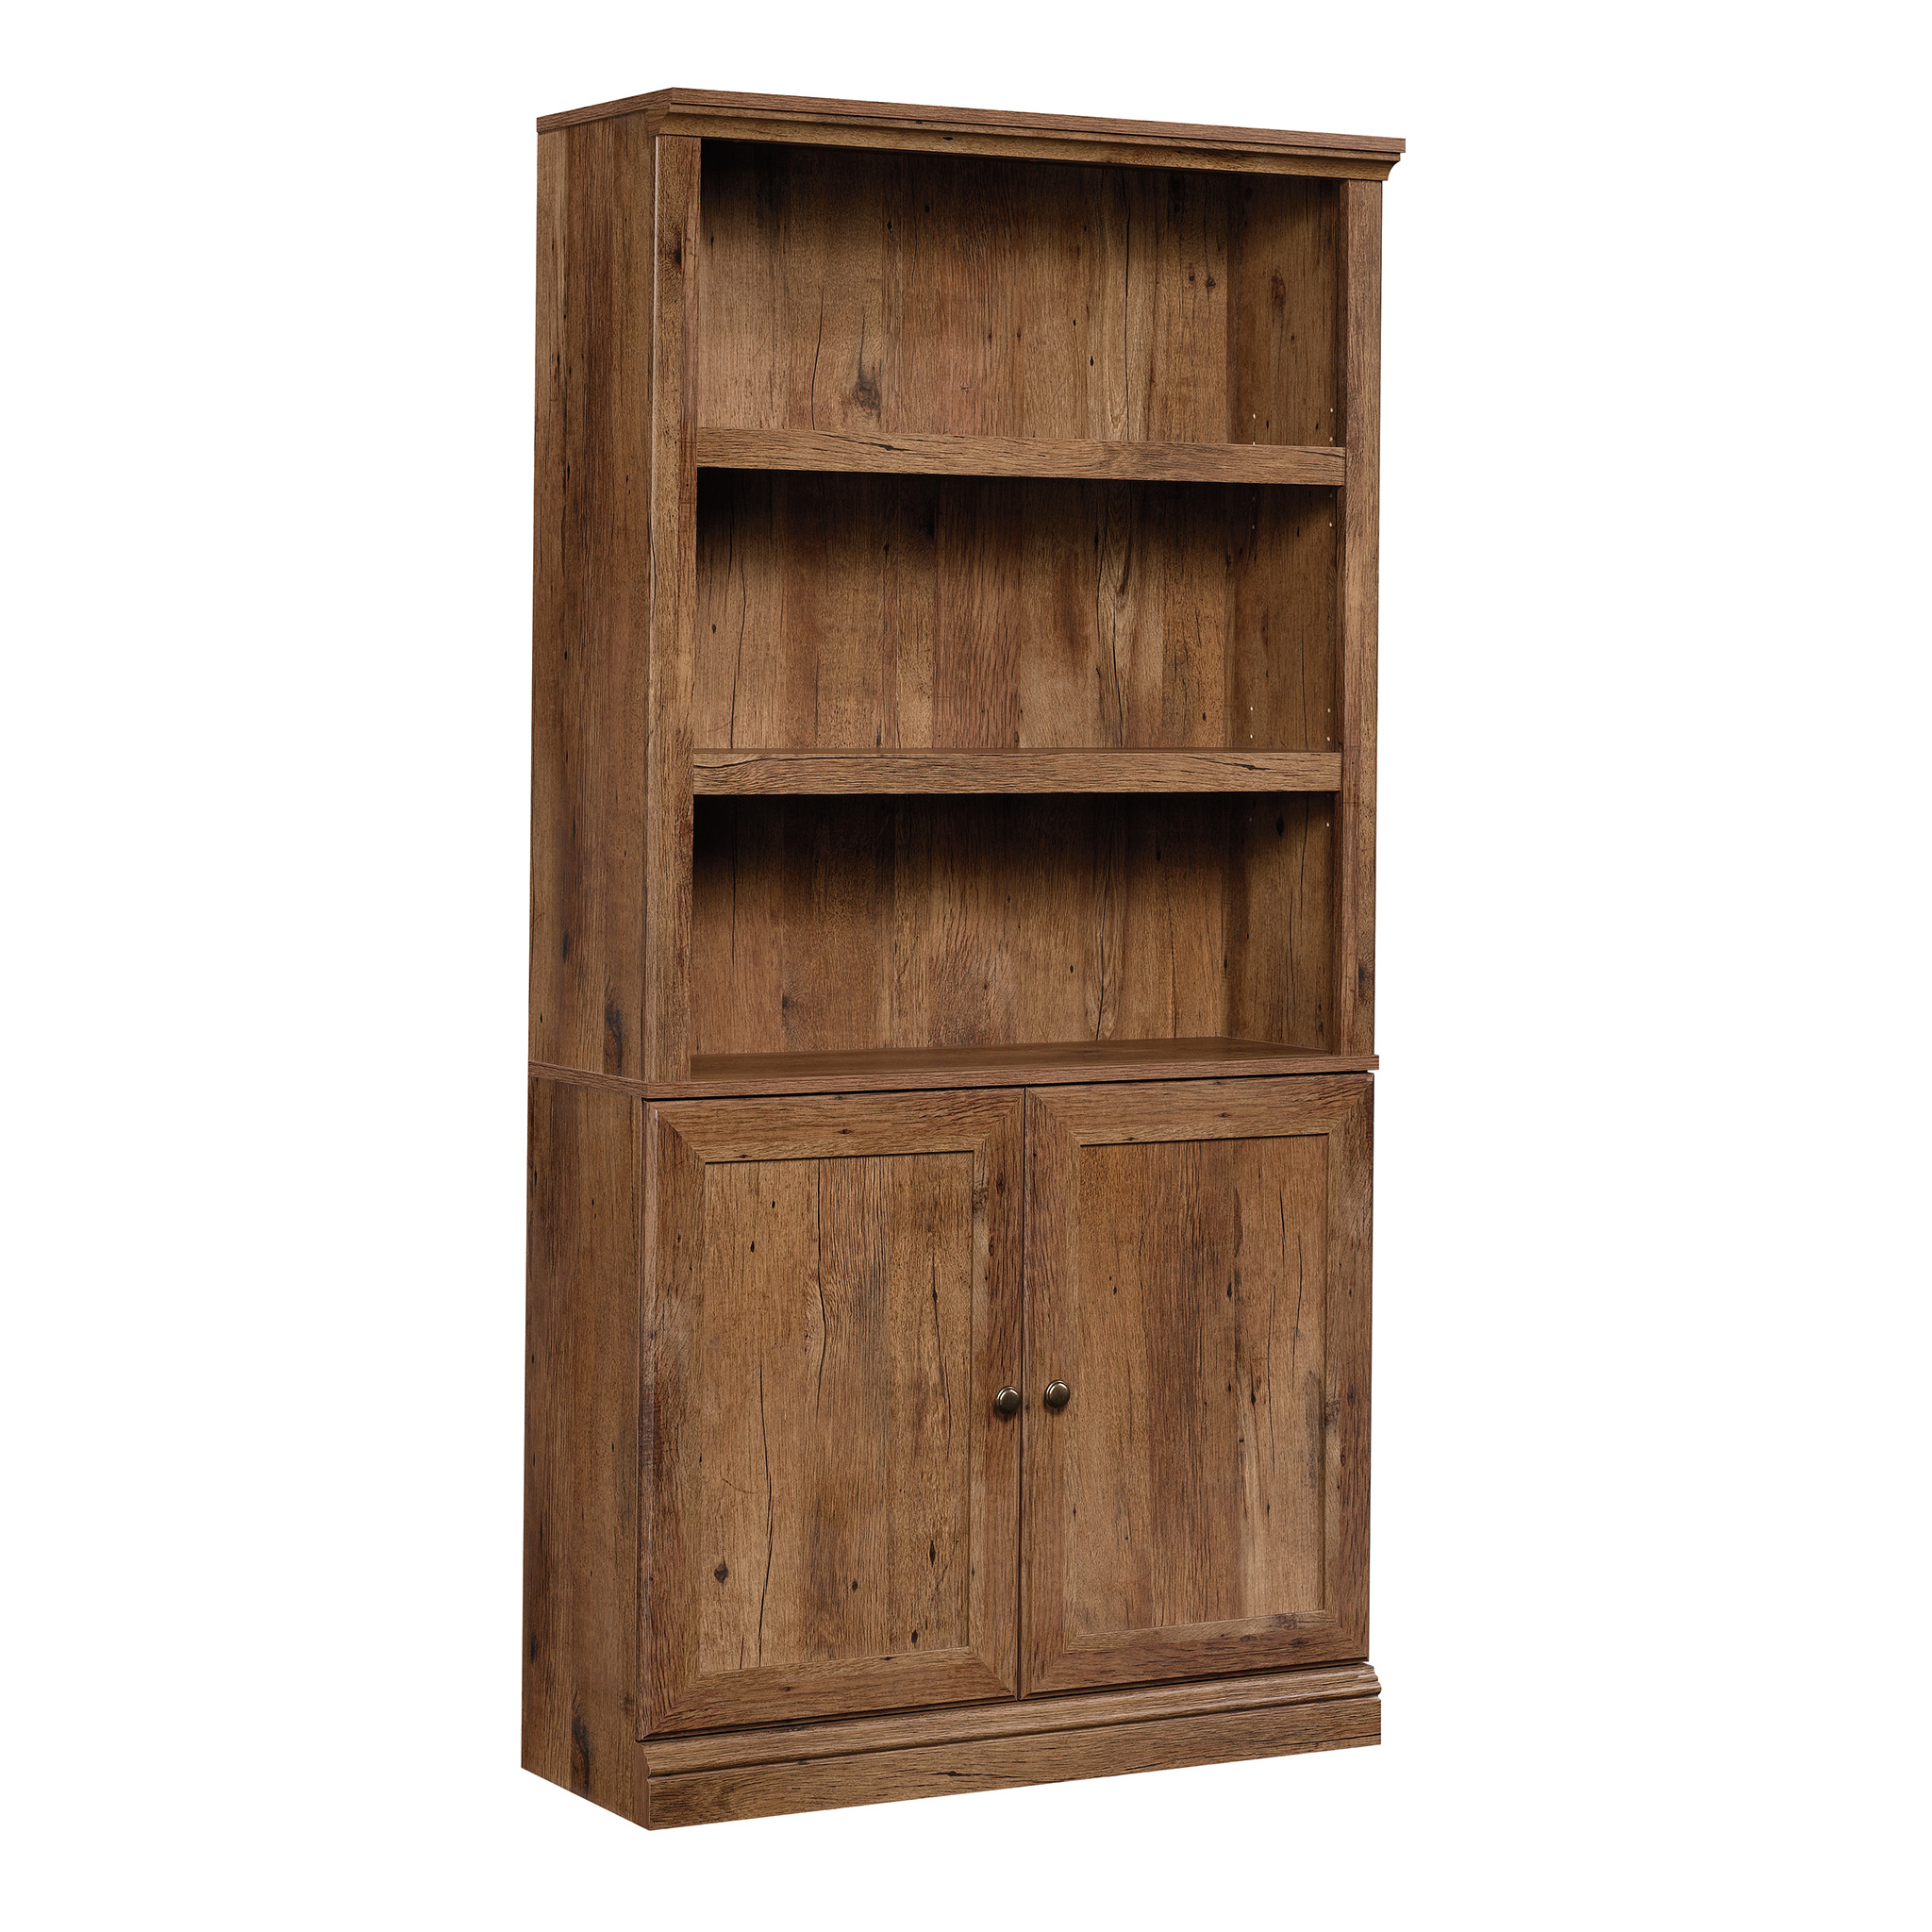 Sauder Select 5 Shelf Bookcase W/Doors, Vintage Oak® finish (# 426417)